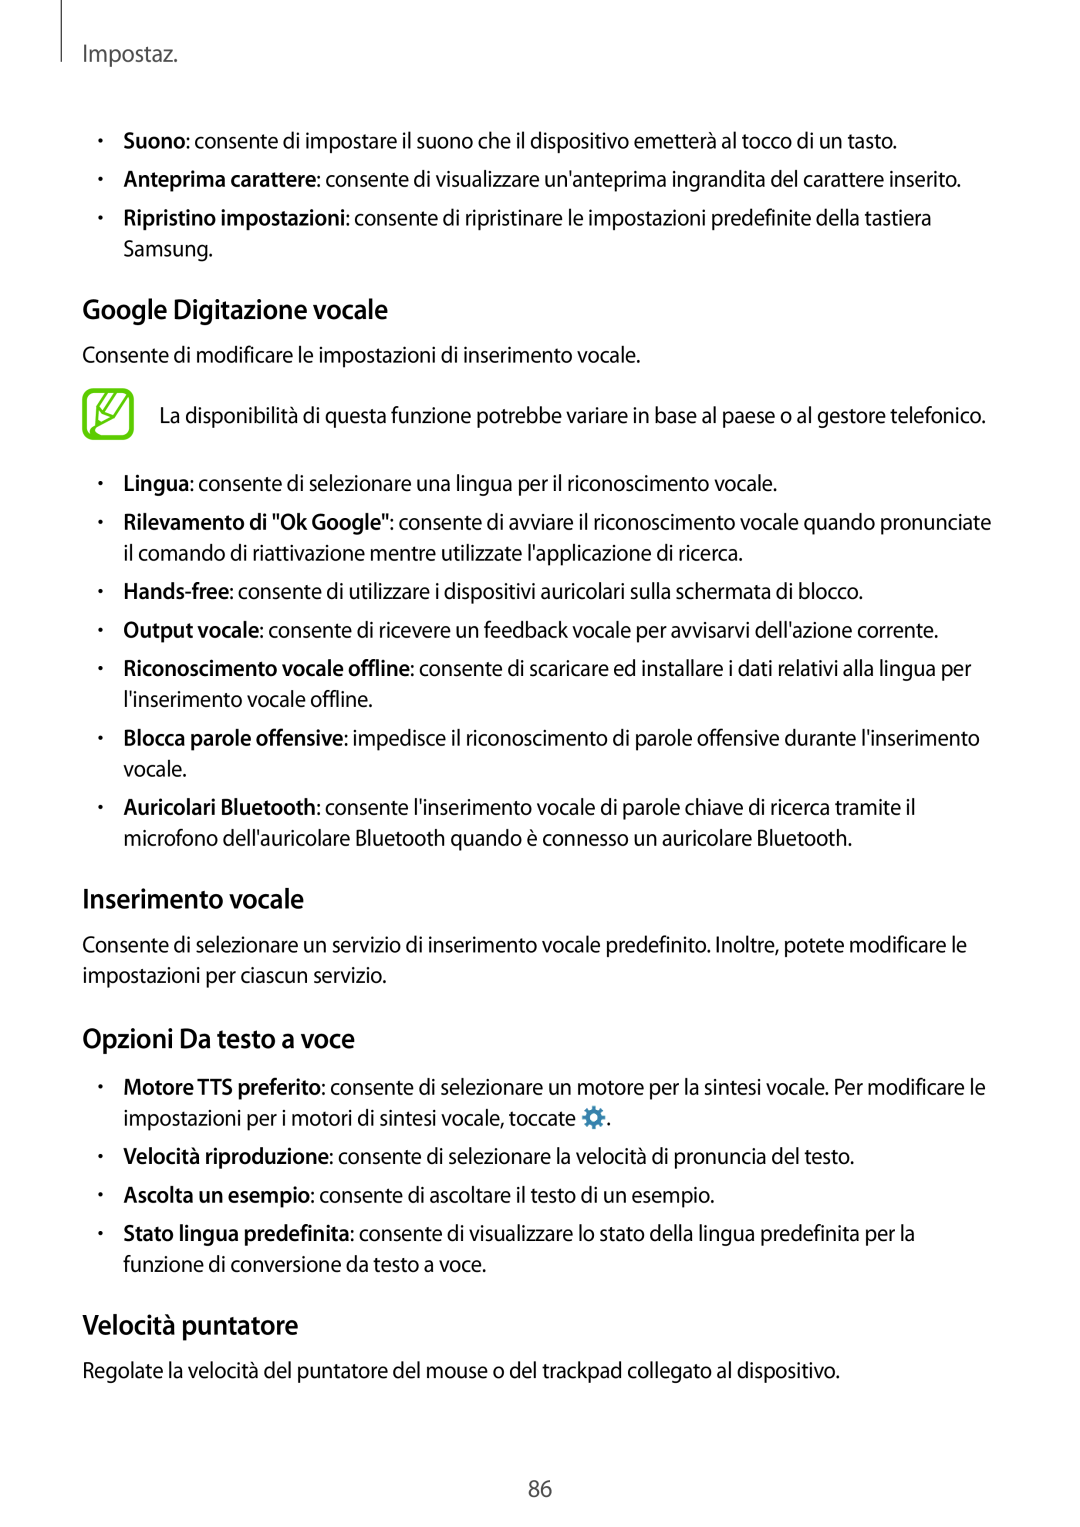 Samsung SM-G531FZDAIDE manual Google Digitazione vocale, Inserimento vocale, Opzioni Da testo a voce, Velocità puntatore 